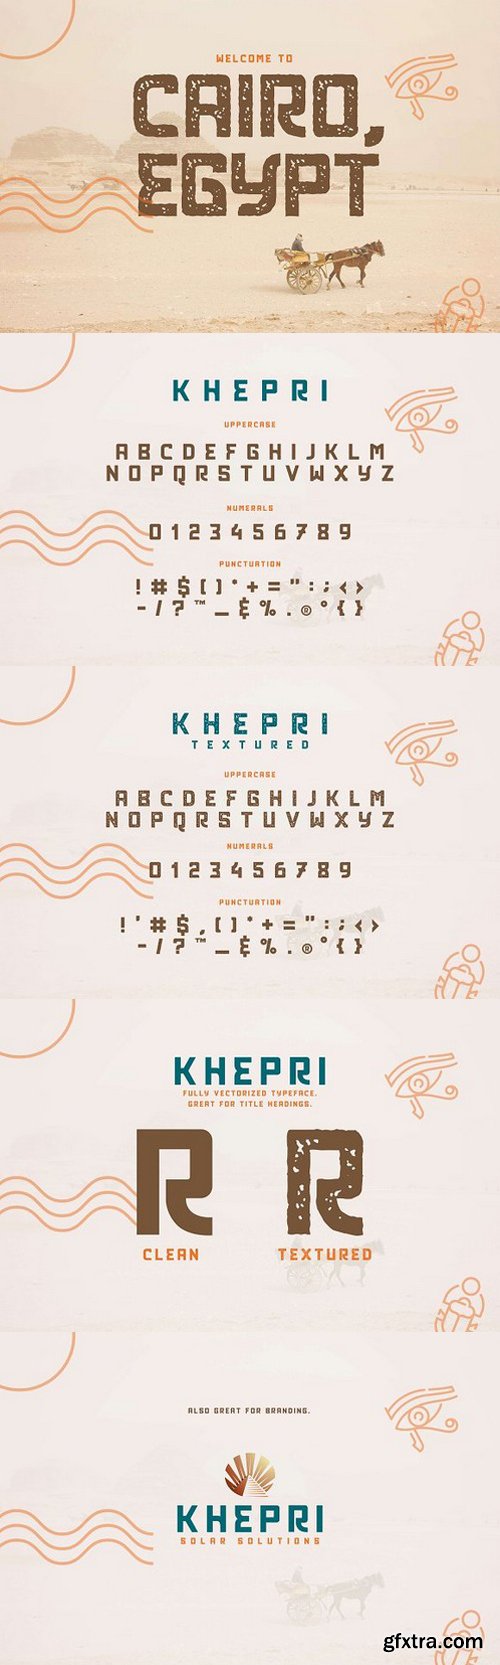 CM - Khepri Sans Serif Fonts 1608502